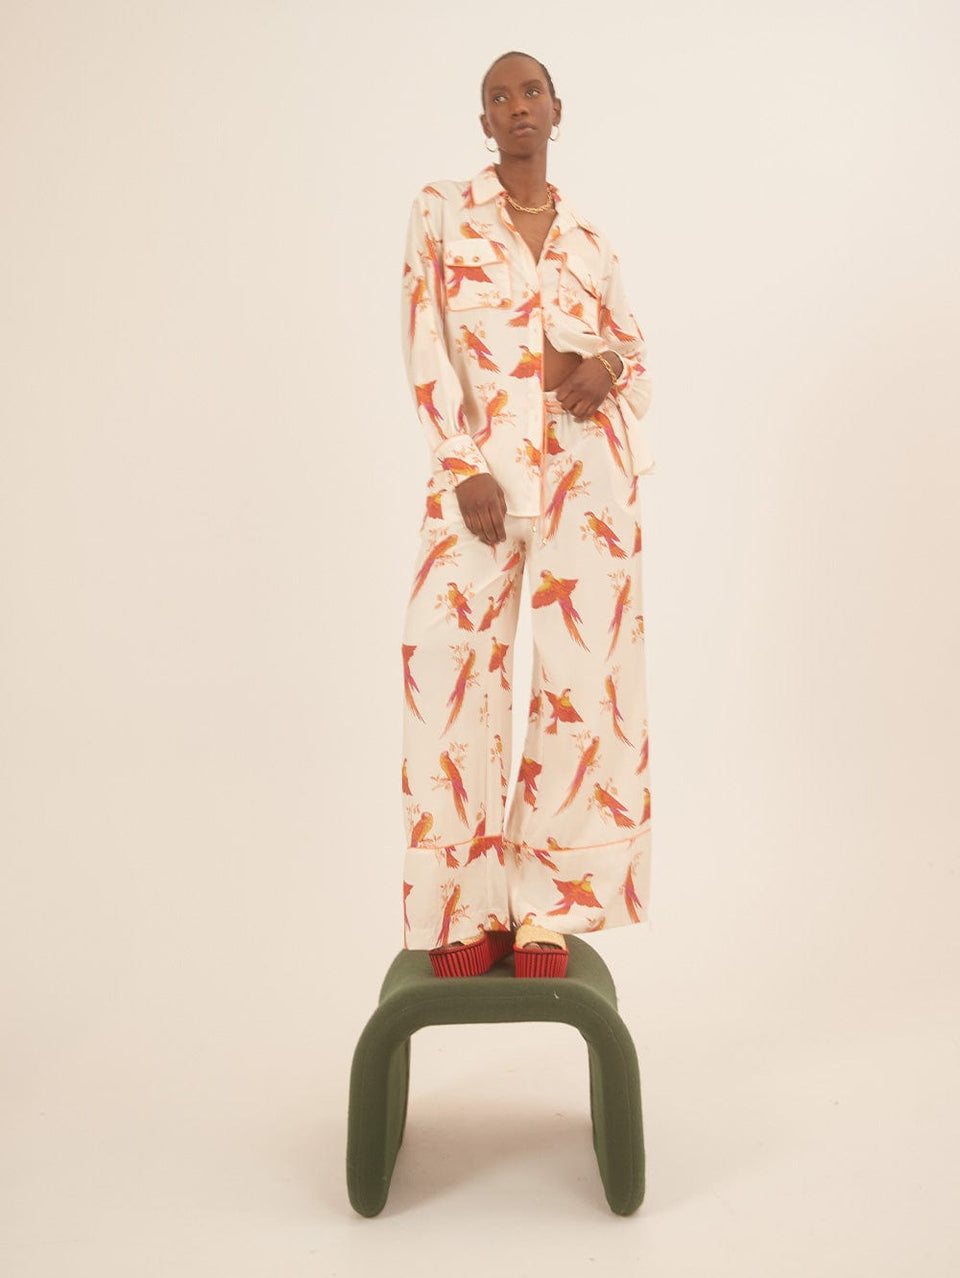 Kaylee Pant KIVARI | Model wears pink and orange bird printed pants campaign